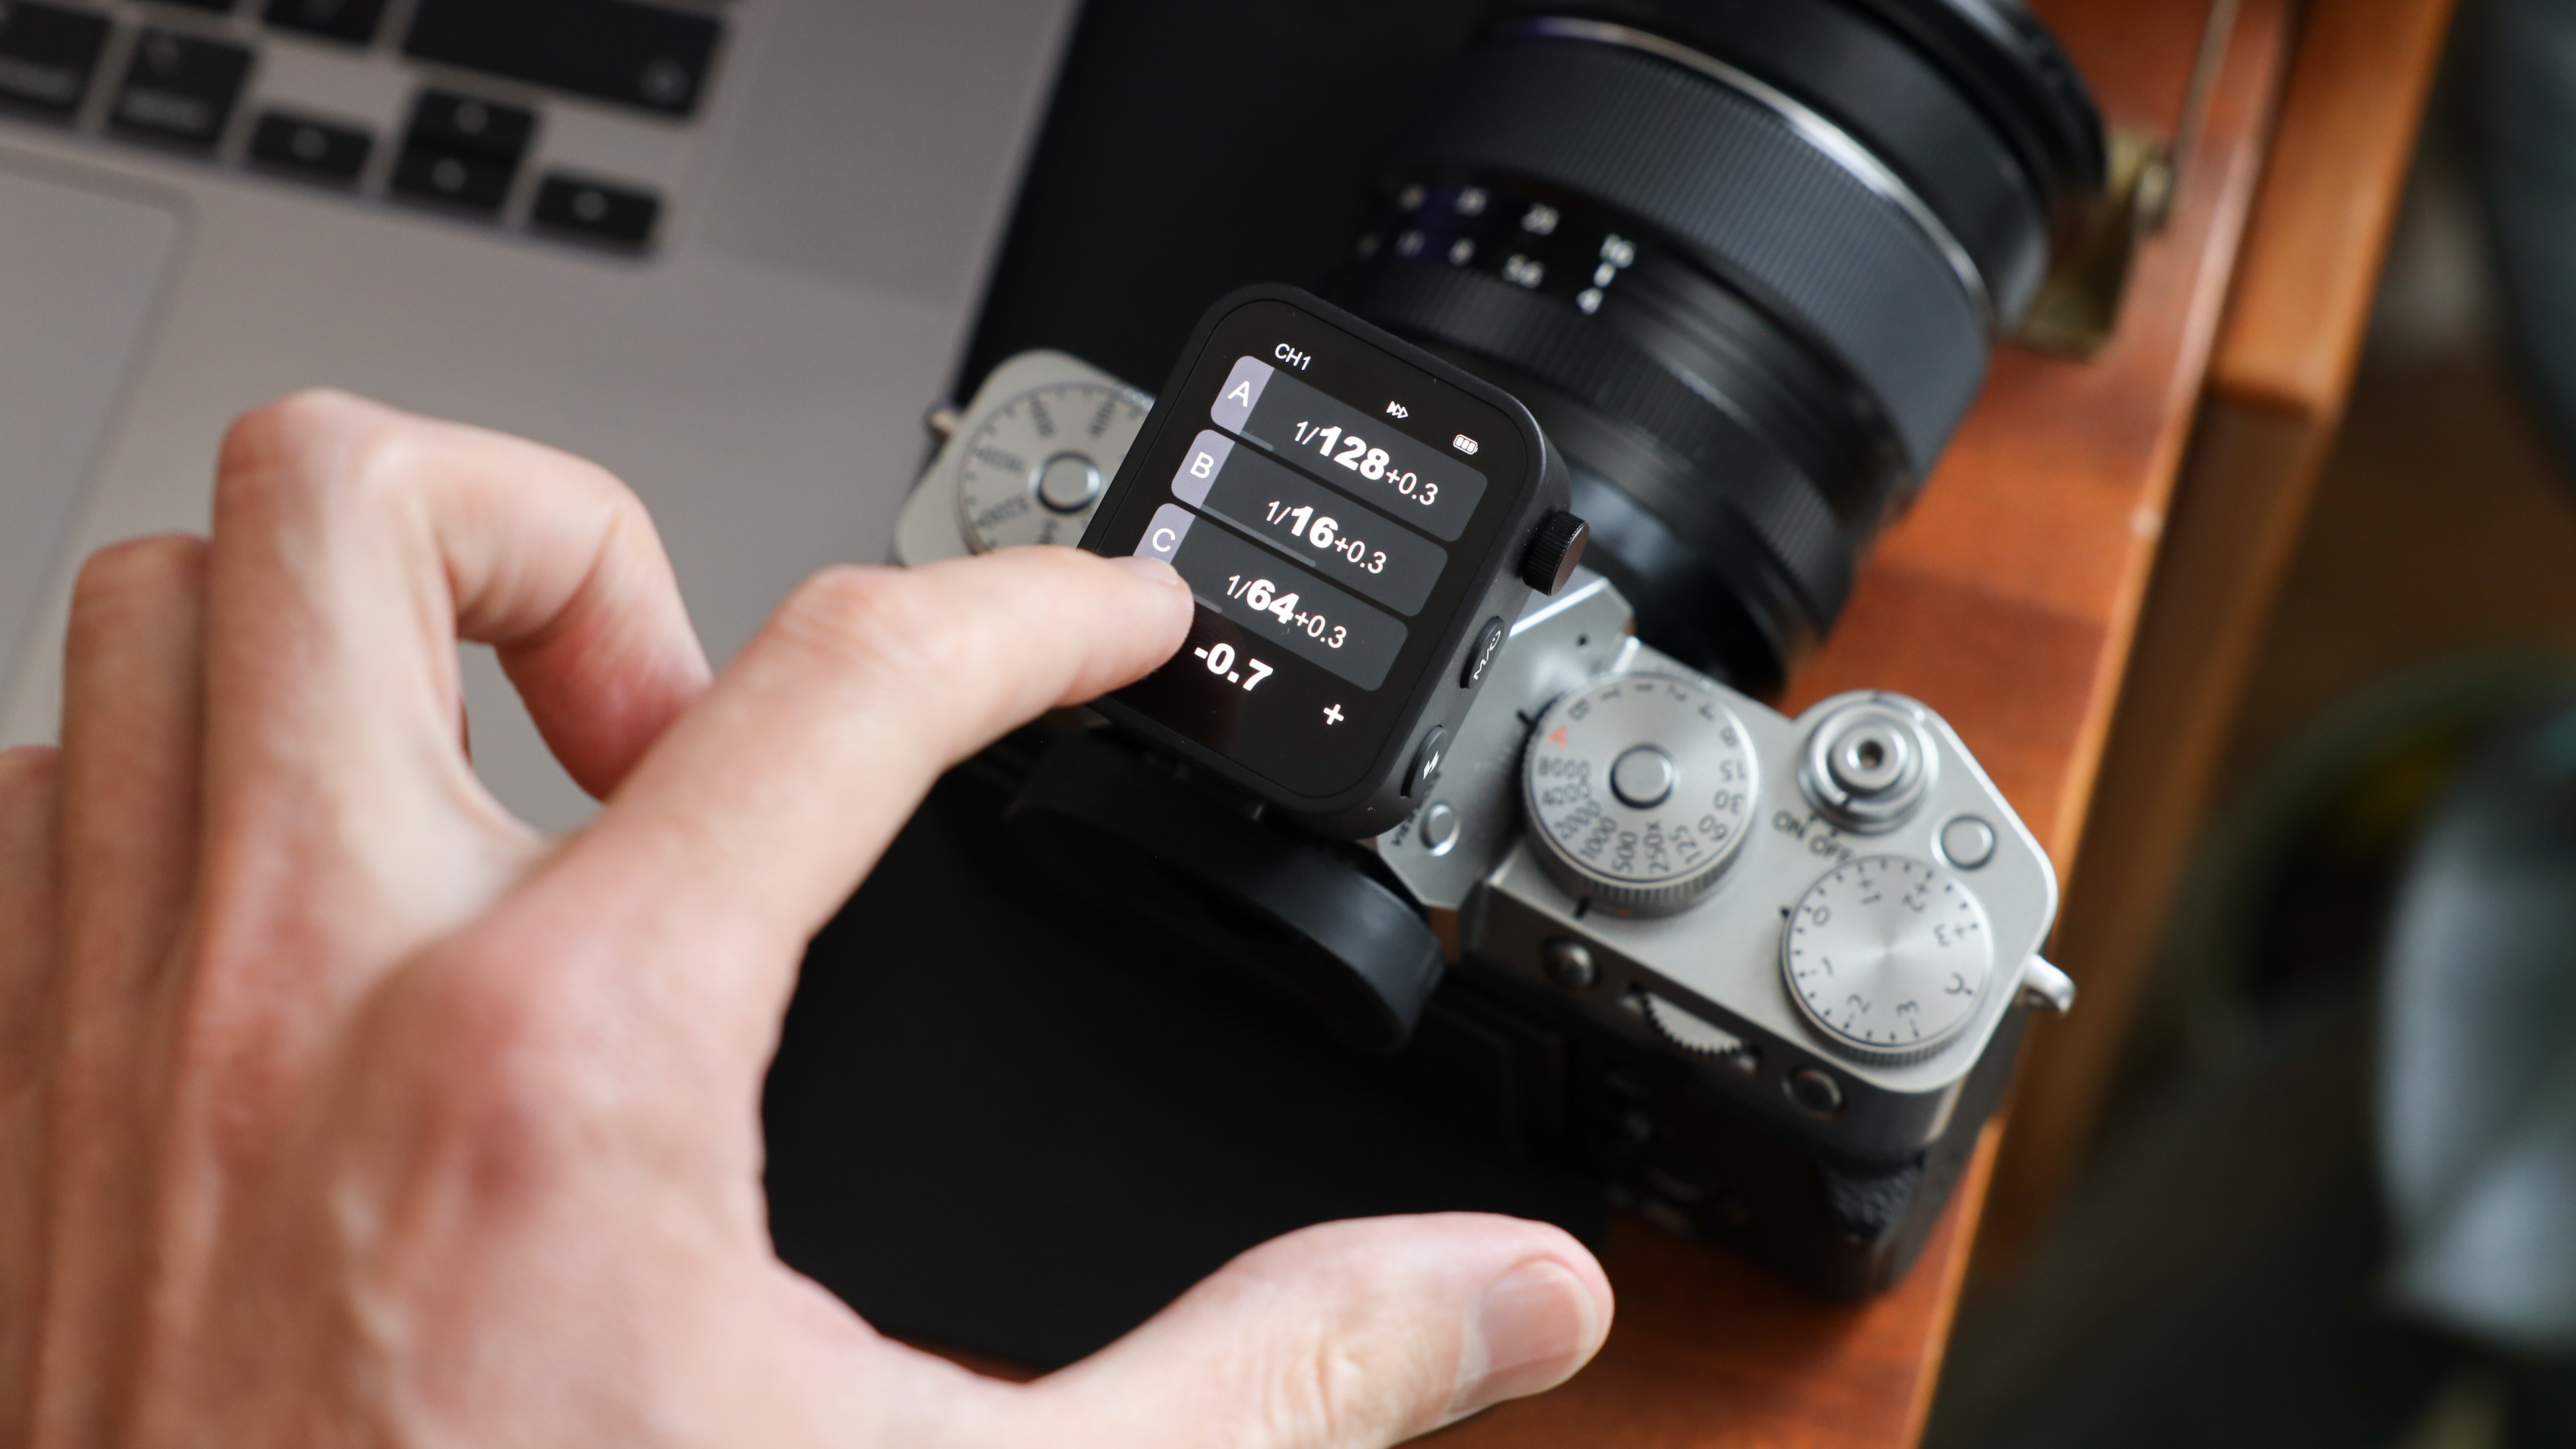 Godox X3 flash trigger mounted on a Fujifilm X-T5 camera